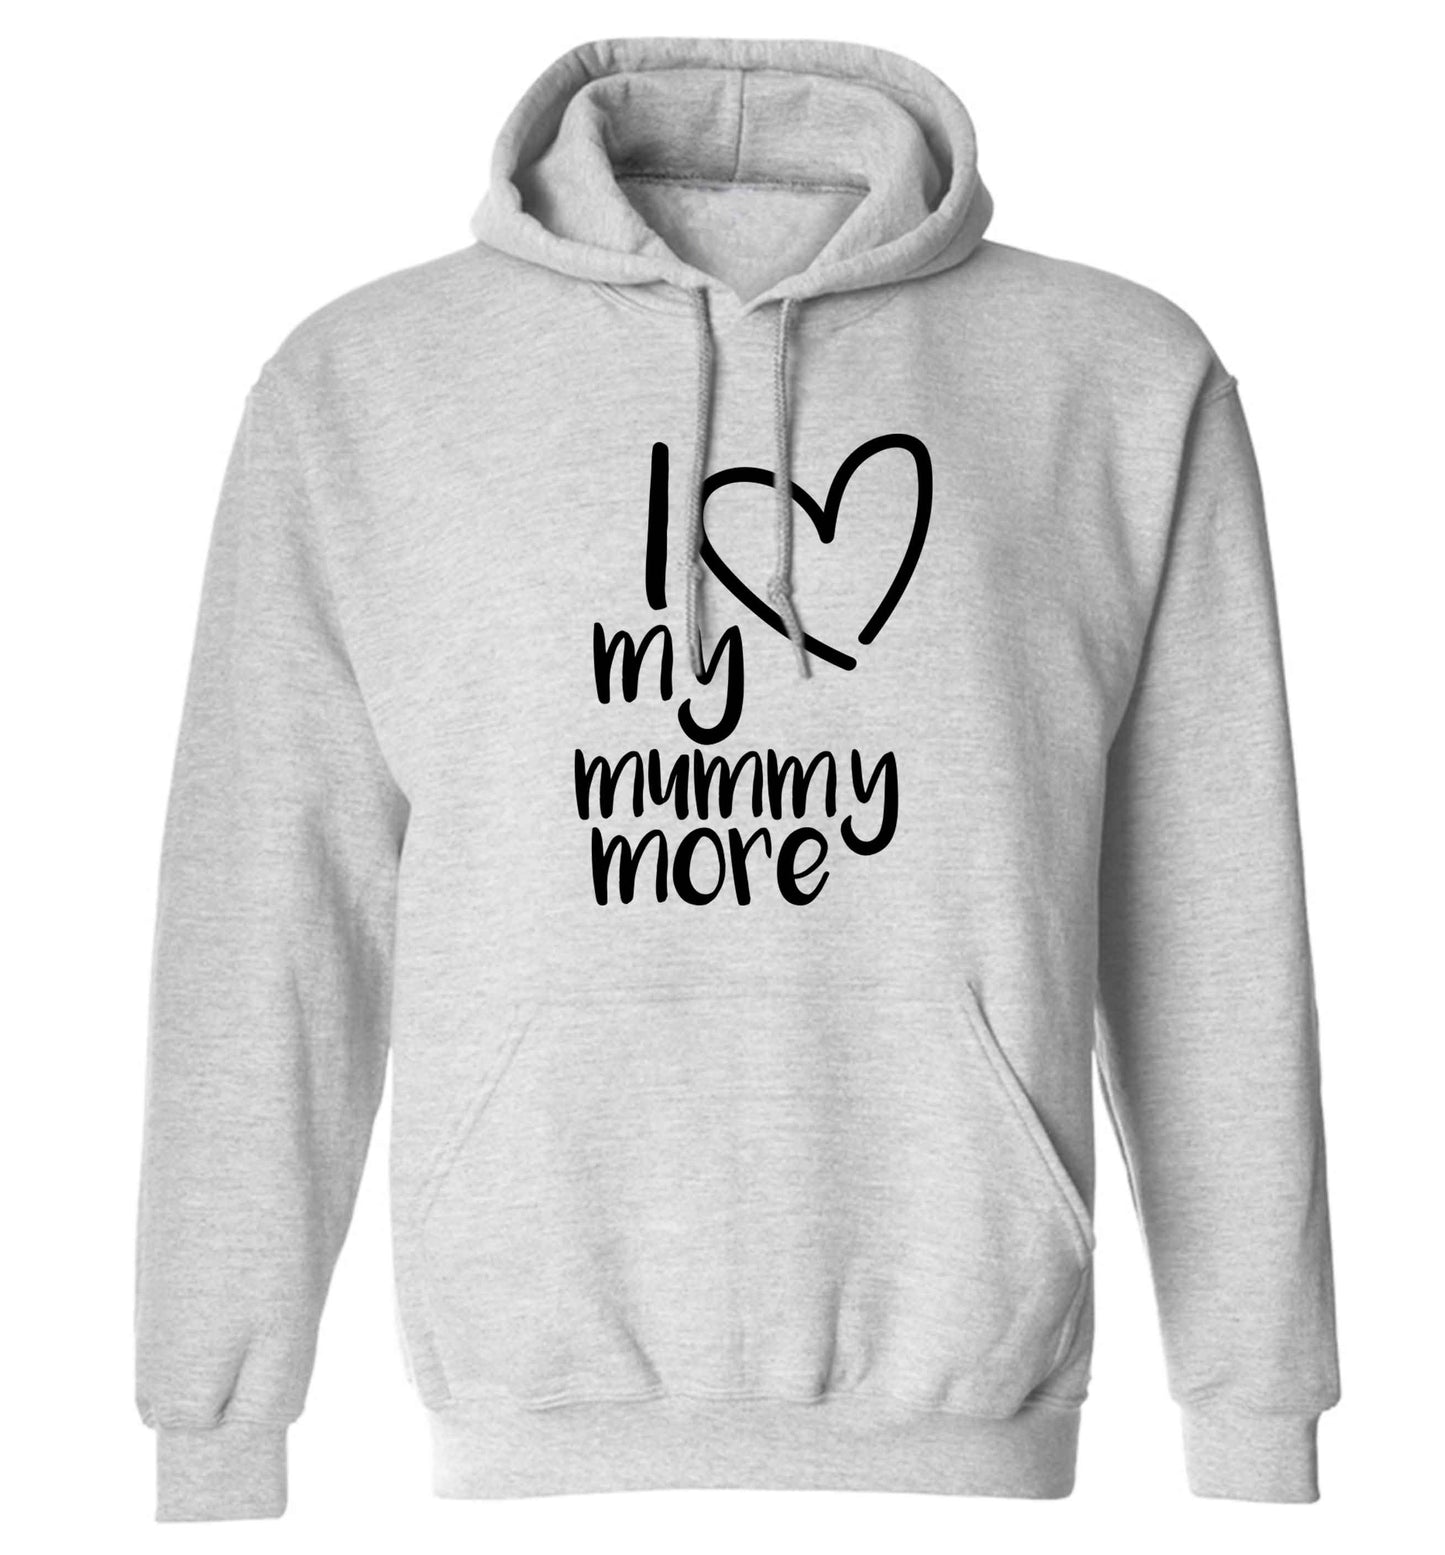 I love my mummy more adults unisex grey hoodie 2XL